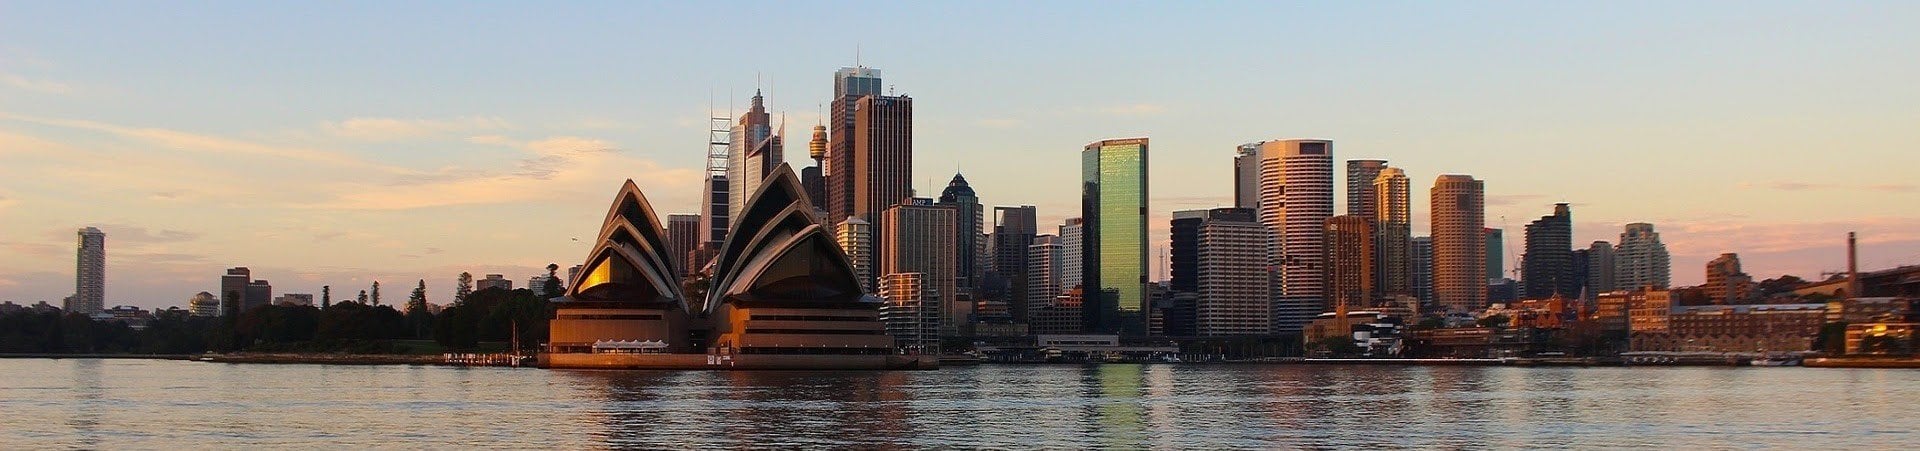 Australia's view of buildings